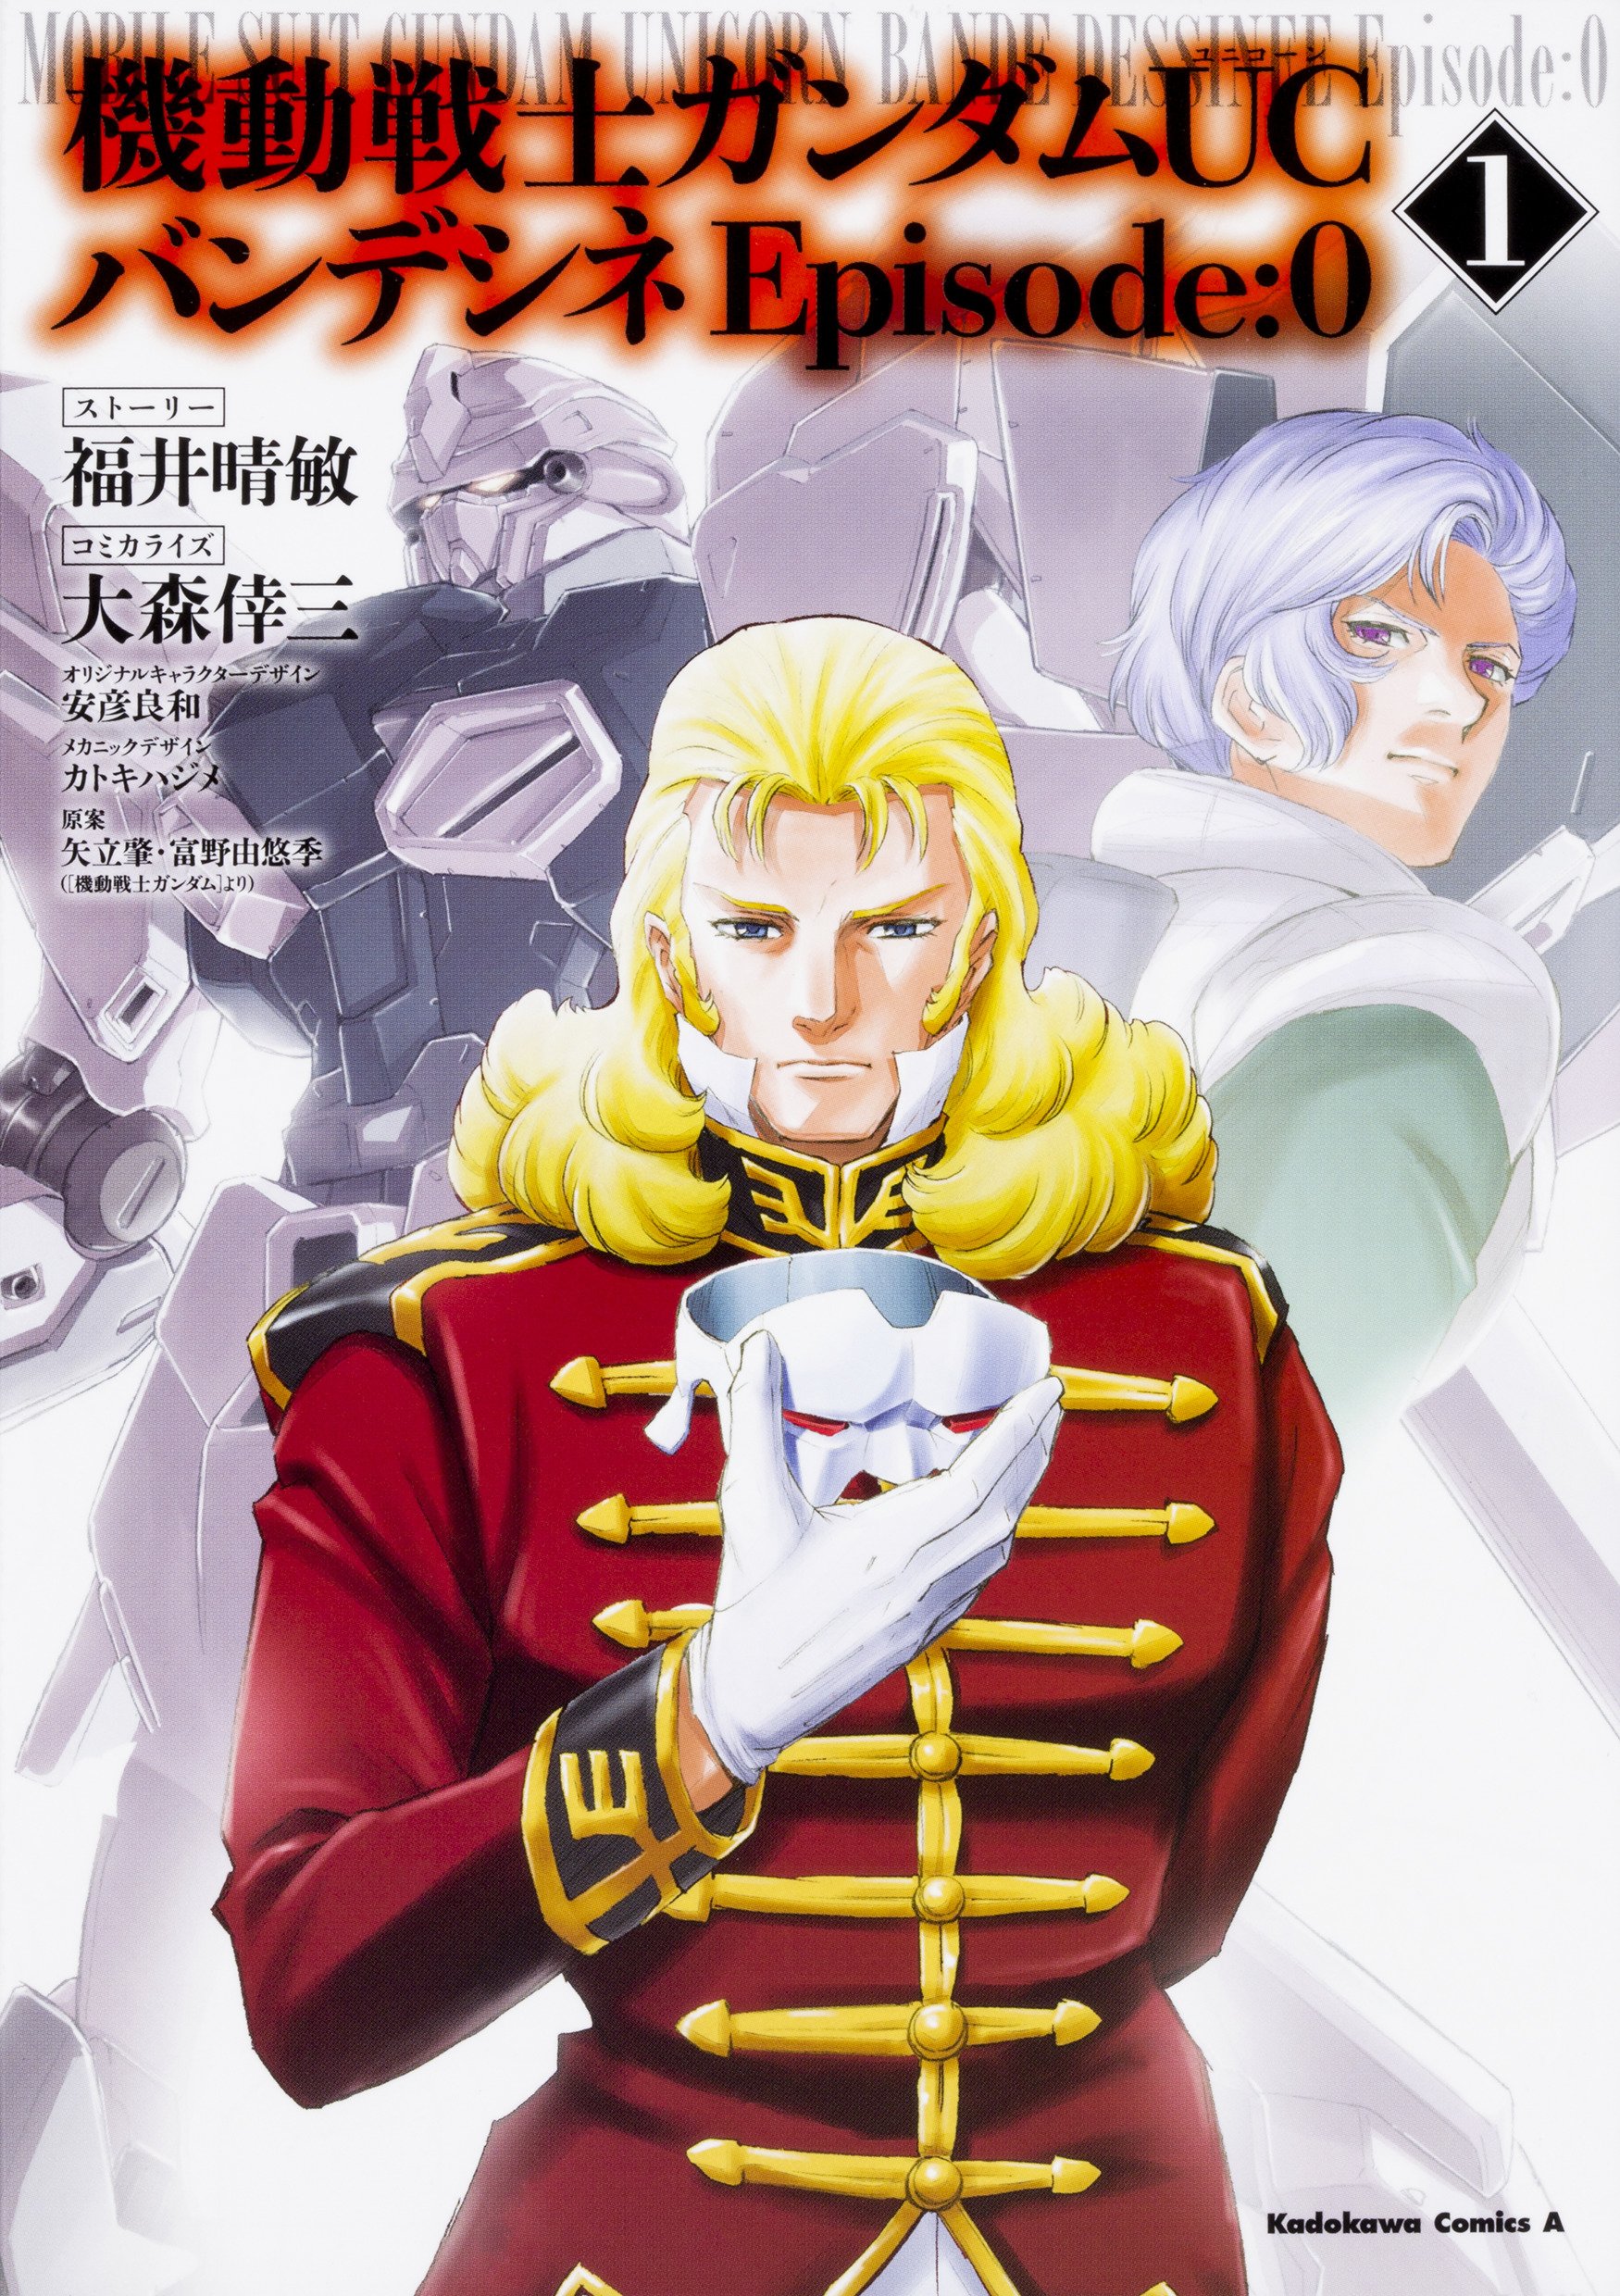 Mobile Suit Gundam UC (Unicorn) - Bande Dessinée: Episode 0 - MangaDex